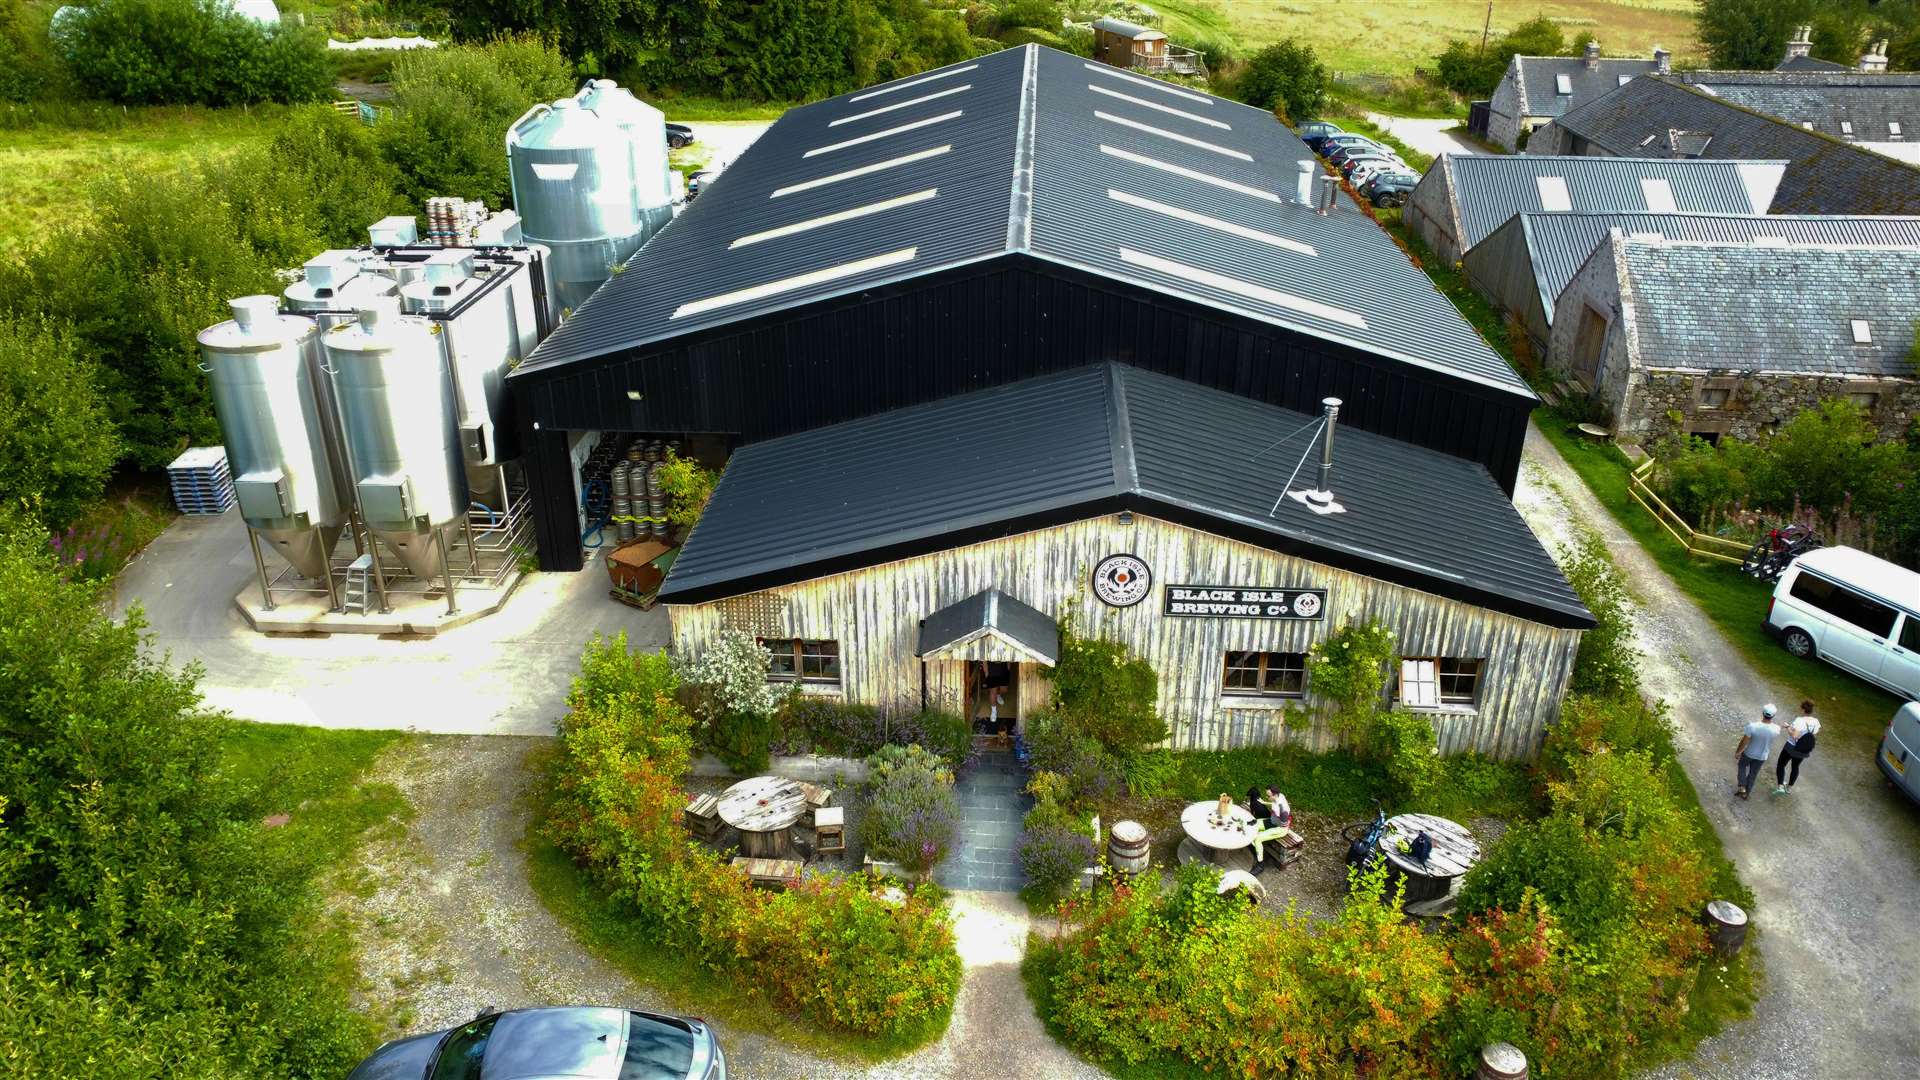 The Black Isle Brewery.